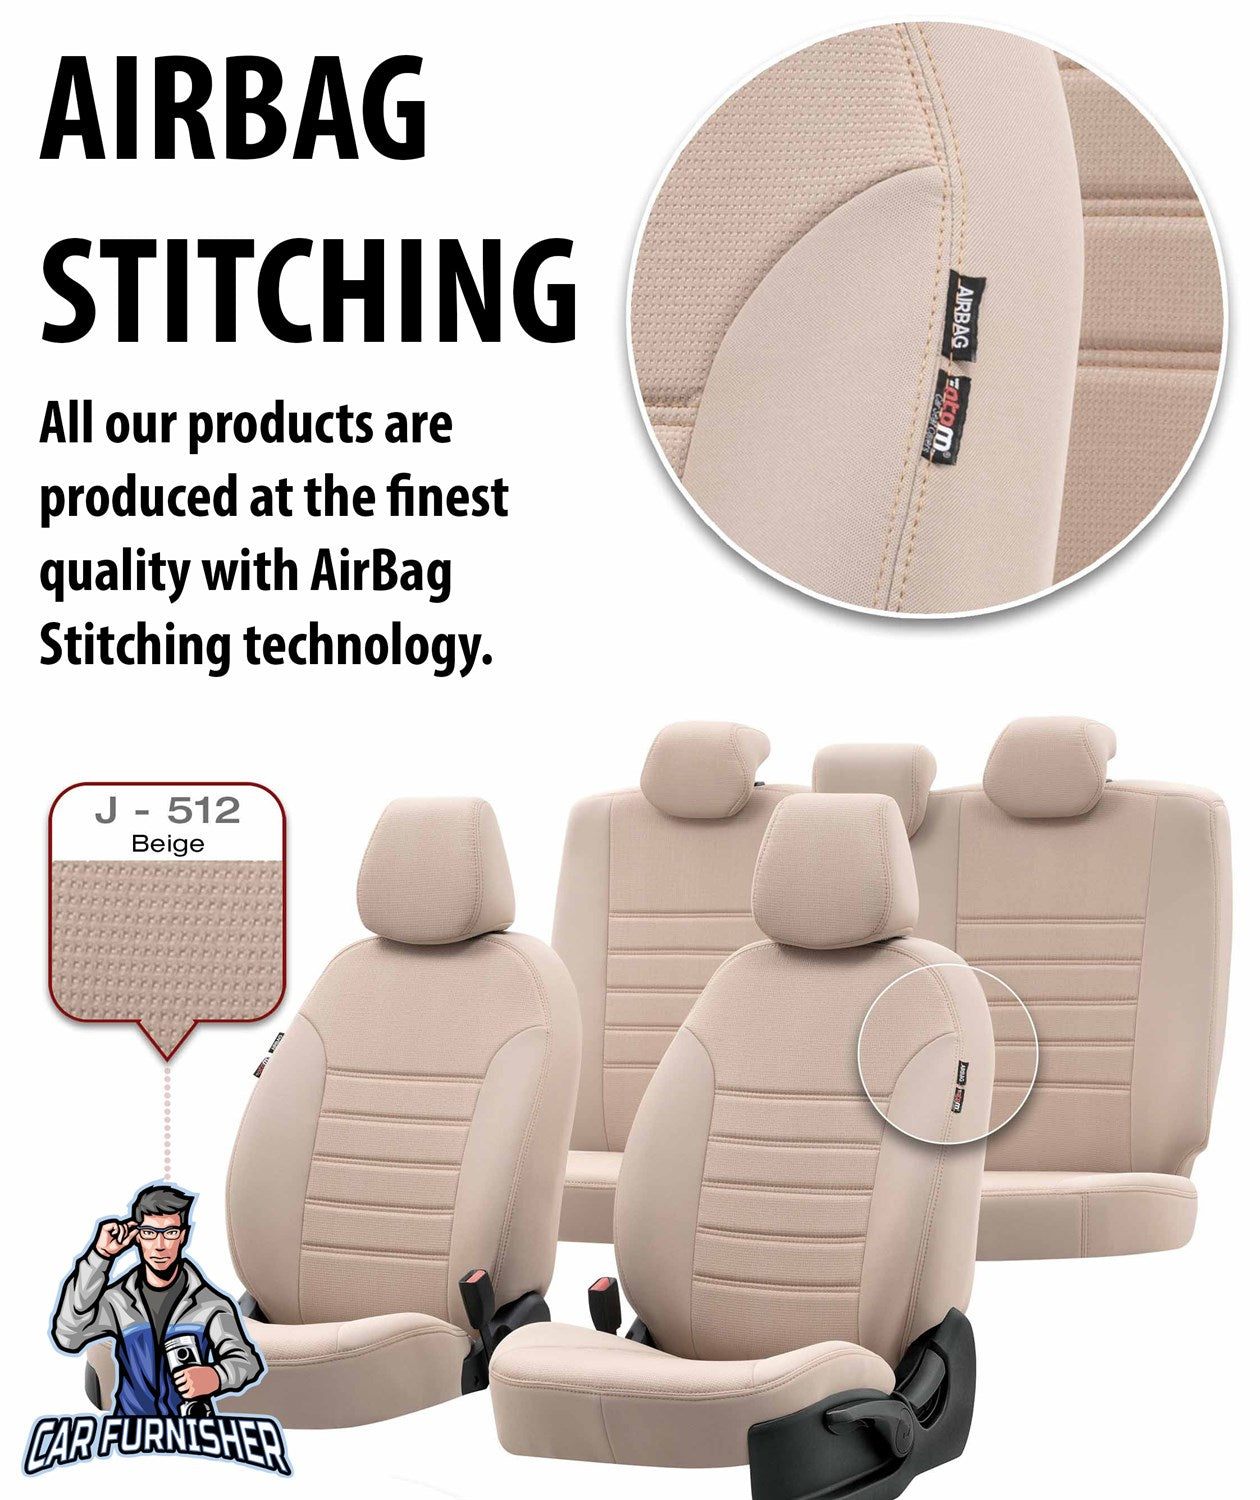 Mitsubishi Attrage Seat Covers Original Jacquard Design Light Gray Jacquard Fabric